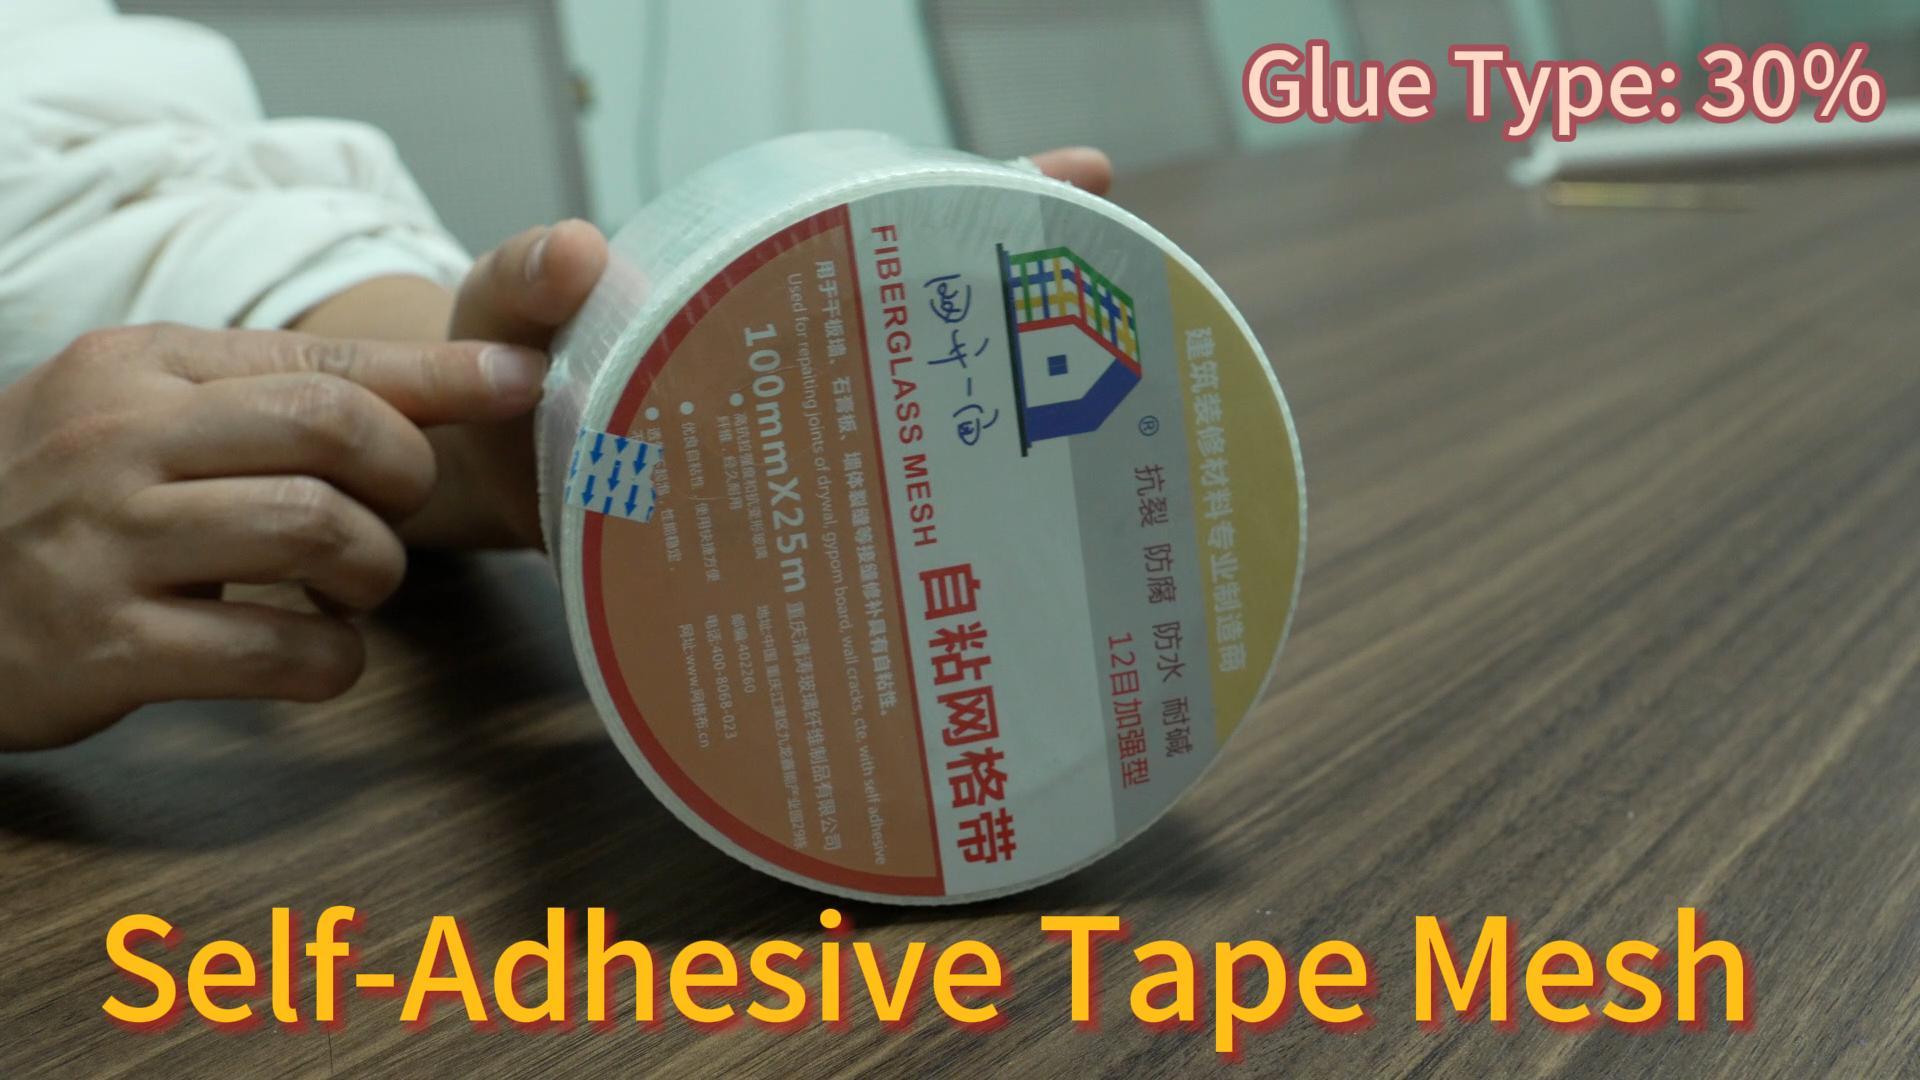 12x12 ນິ້ວ tape meshesive ຂອງຕົນເອງ